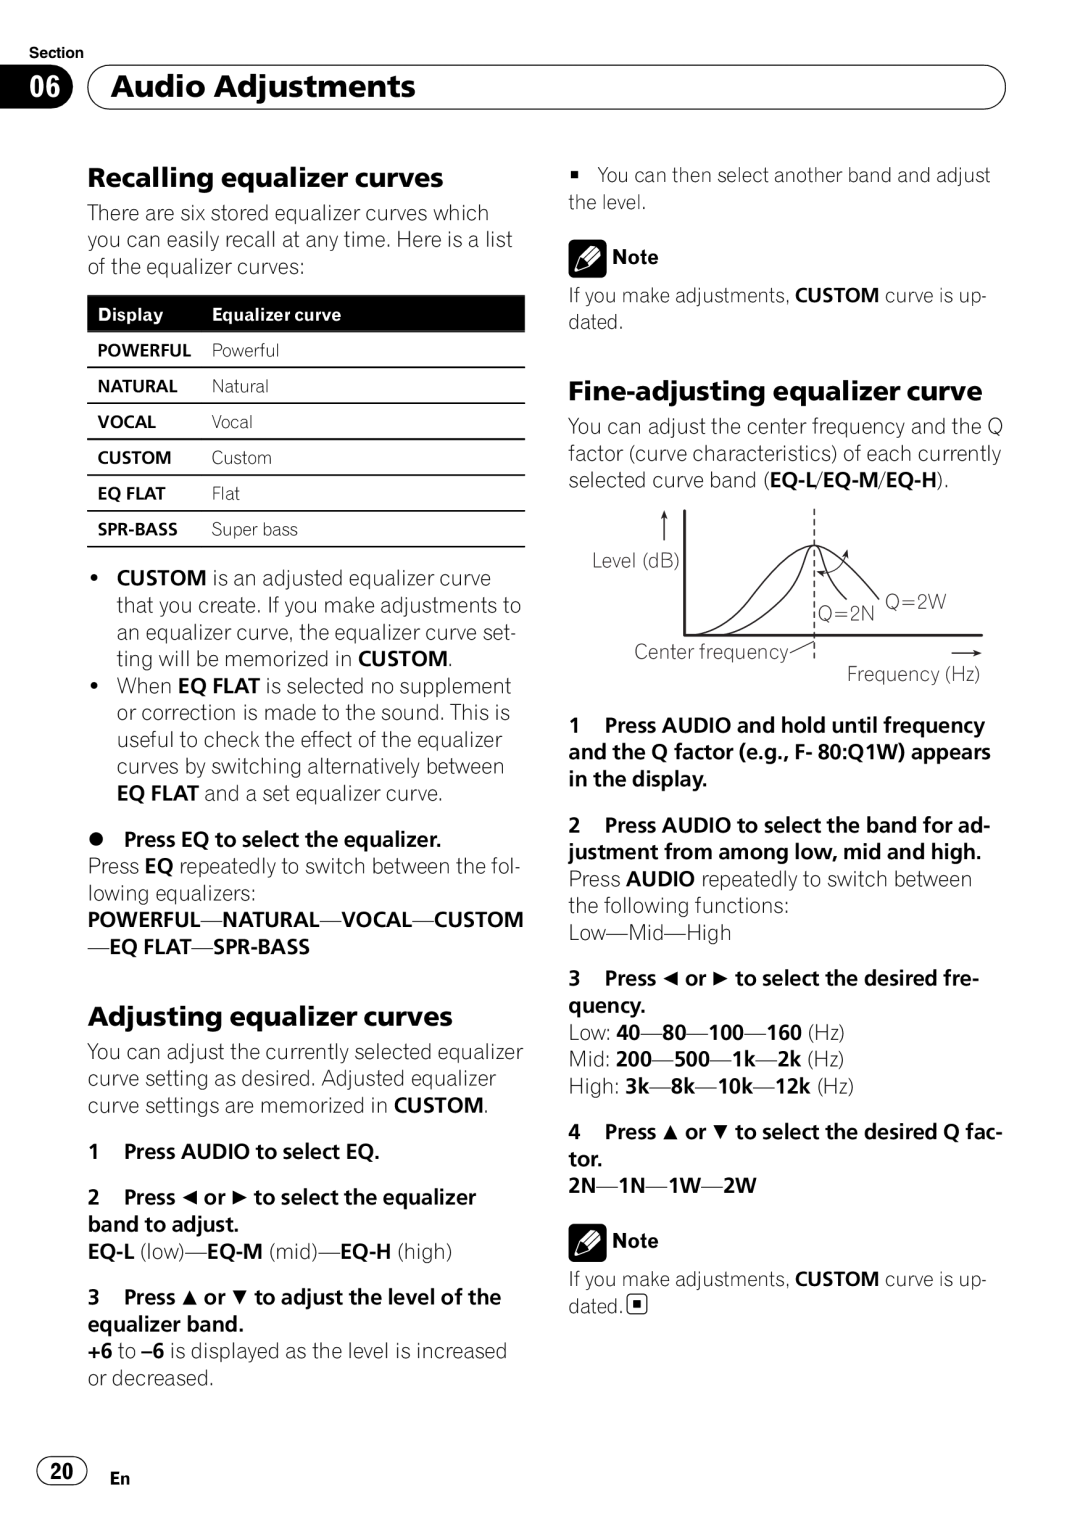 Sony DEH-P2900MP operation manual 06Audio Adjustments, Recalling equalizer curves, Adjusting equalizer curves 